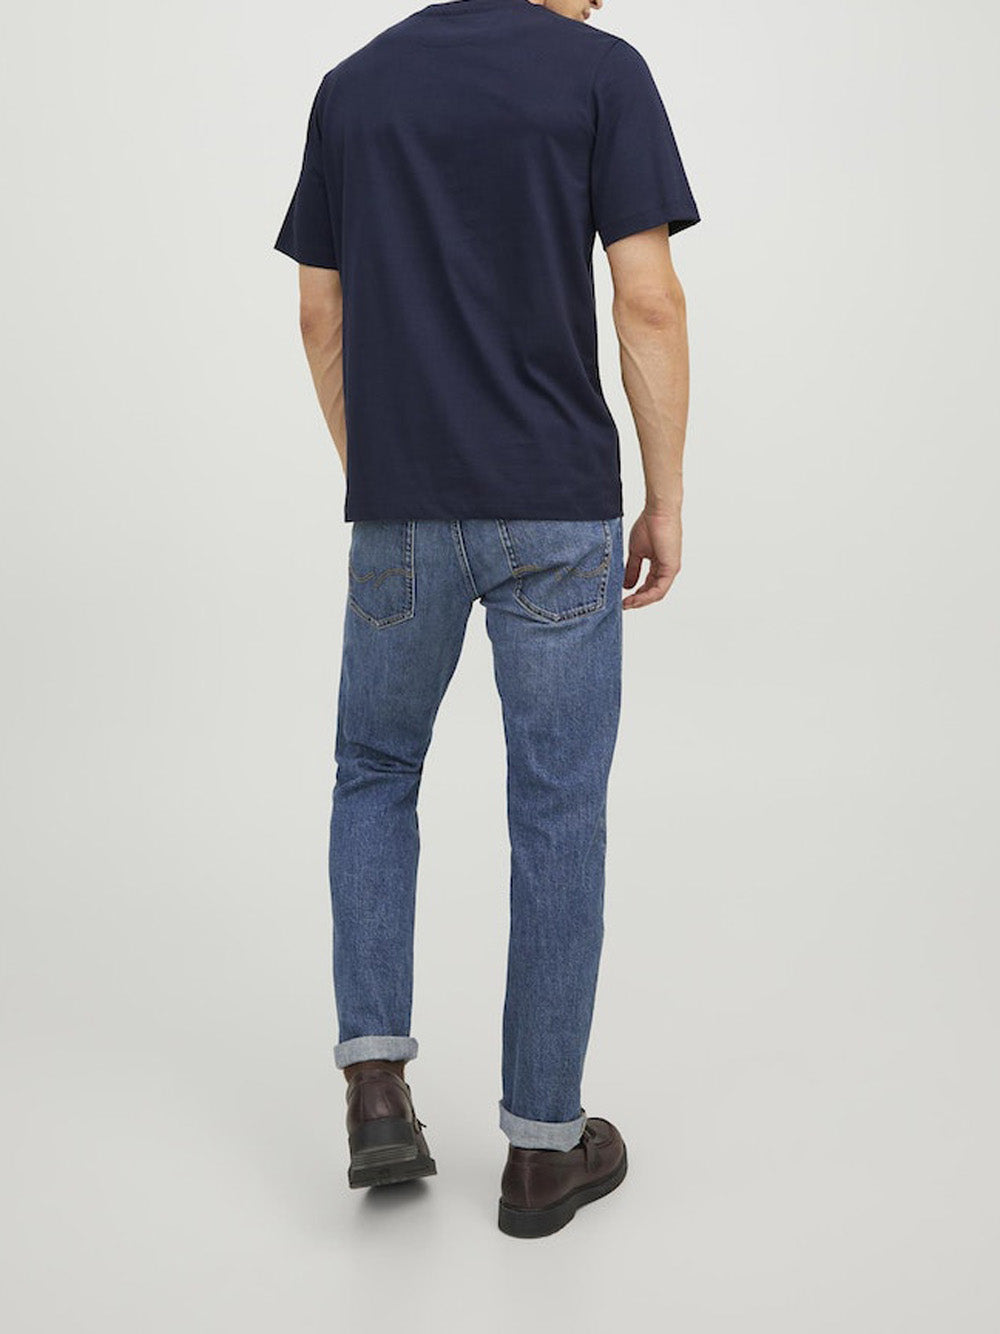 JACK&JONES T-shirt Uomo - Blu modello 12241894